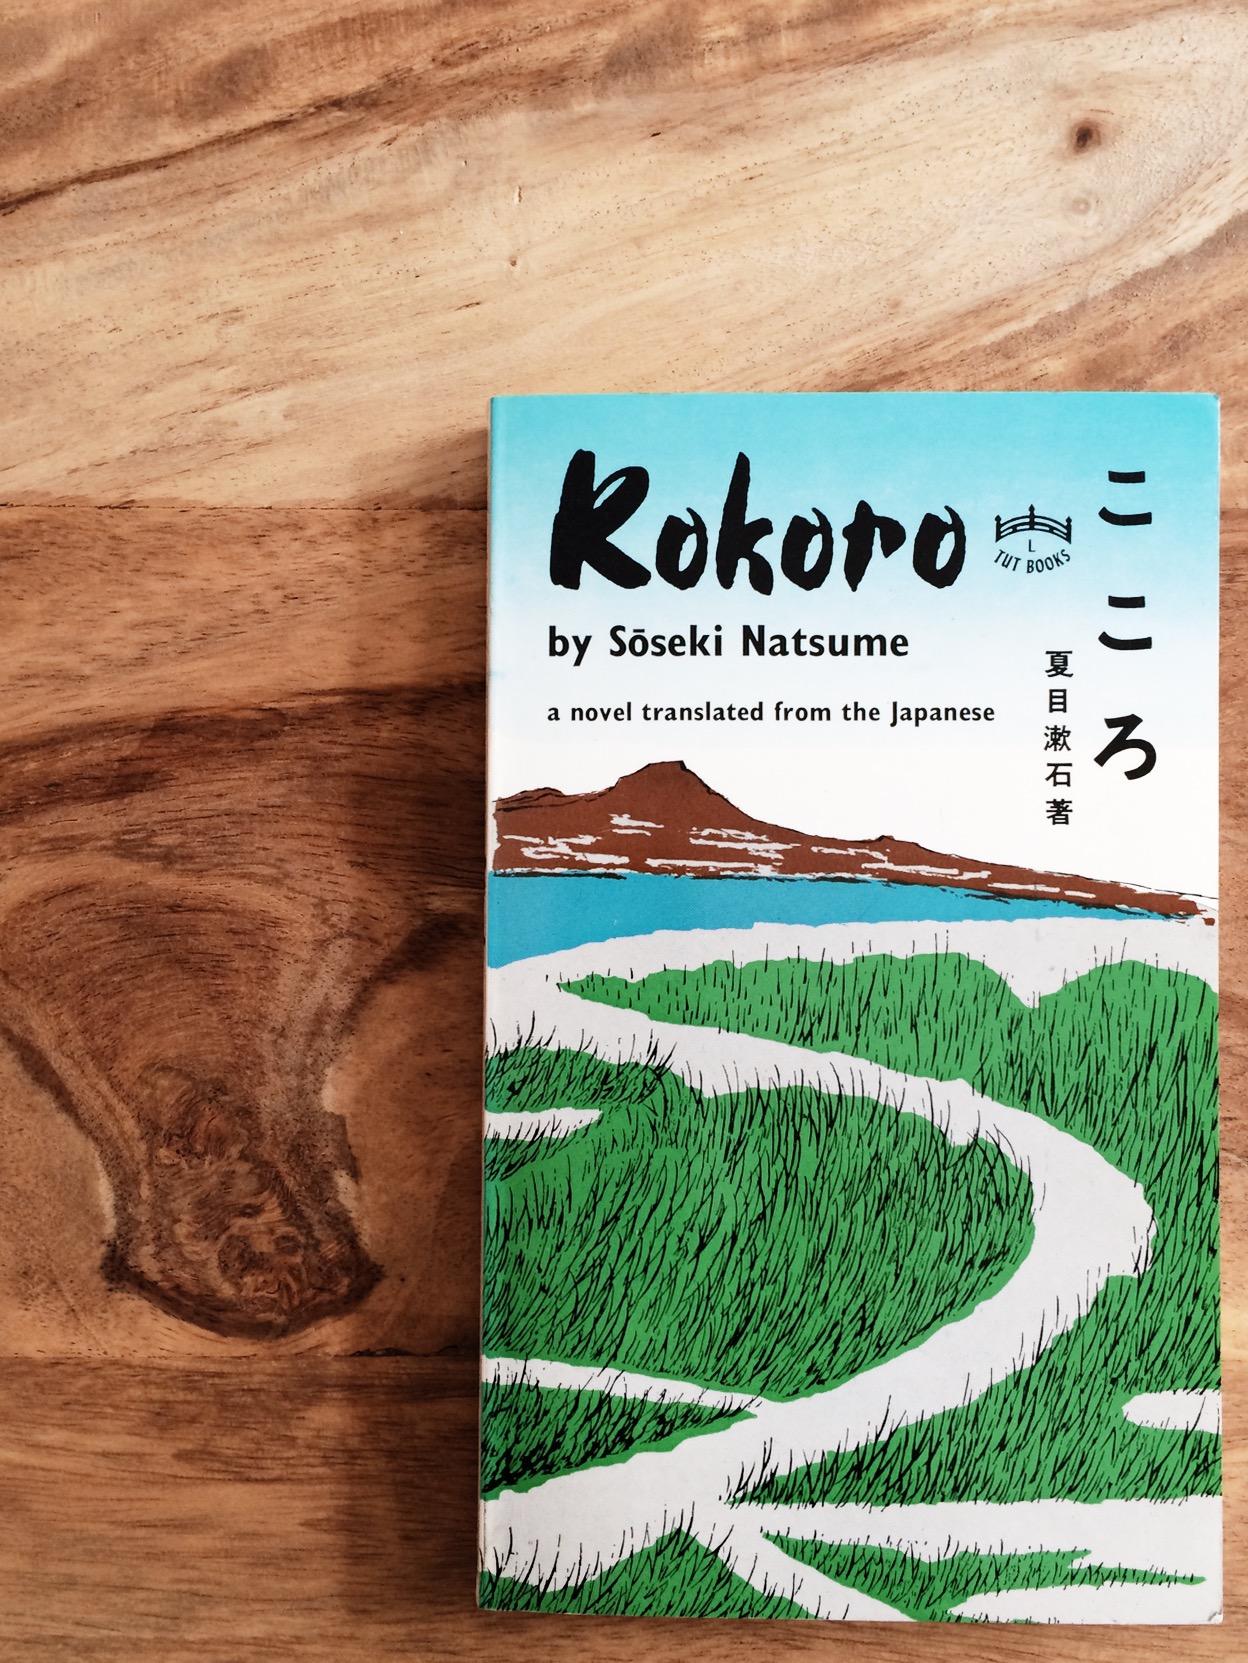 Kokoro - Meaning of Kokoro, What does Kokoro mean?